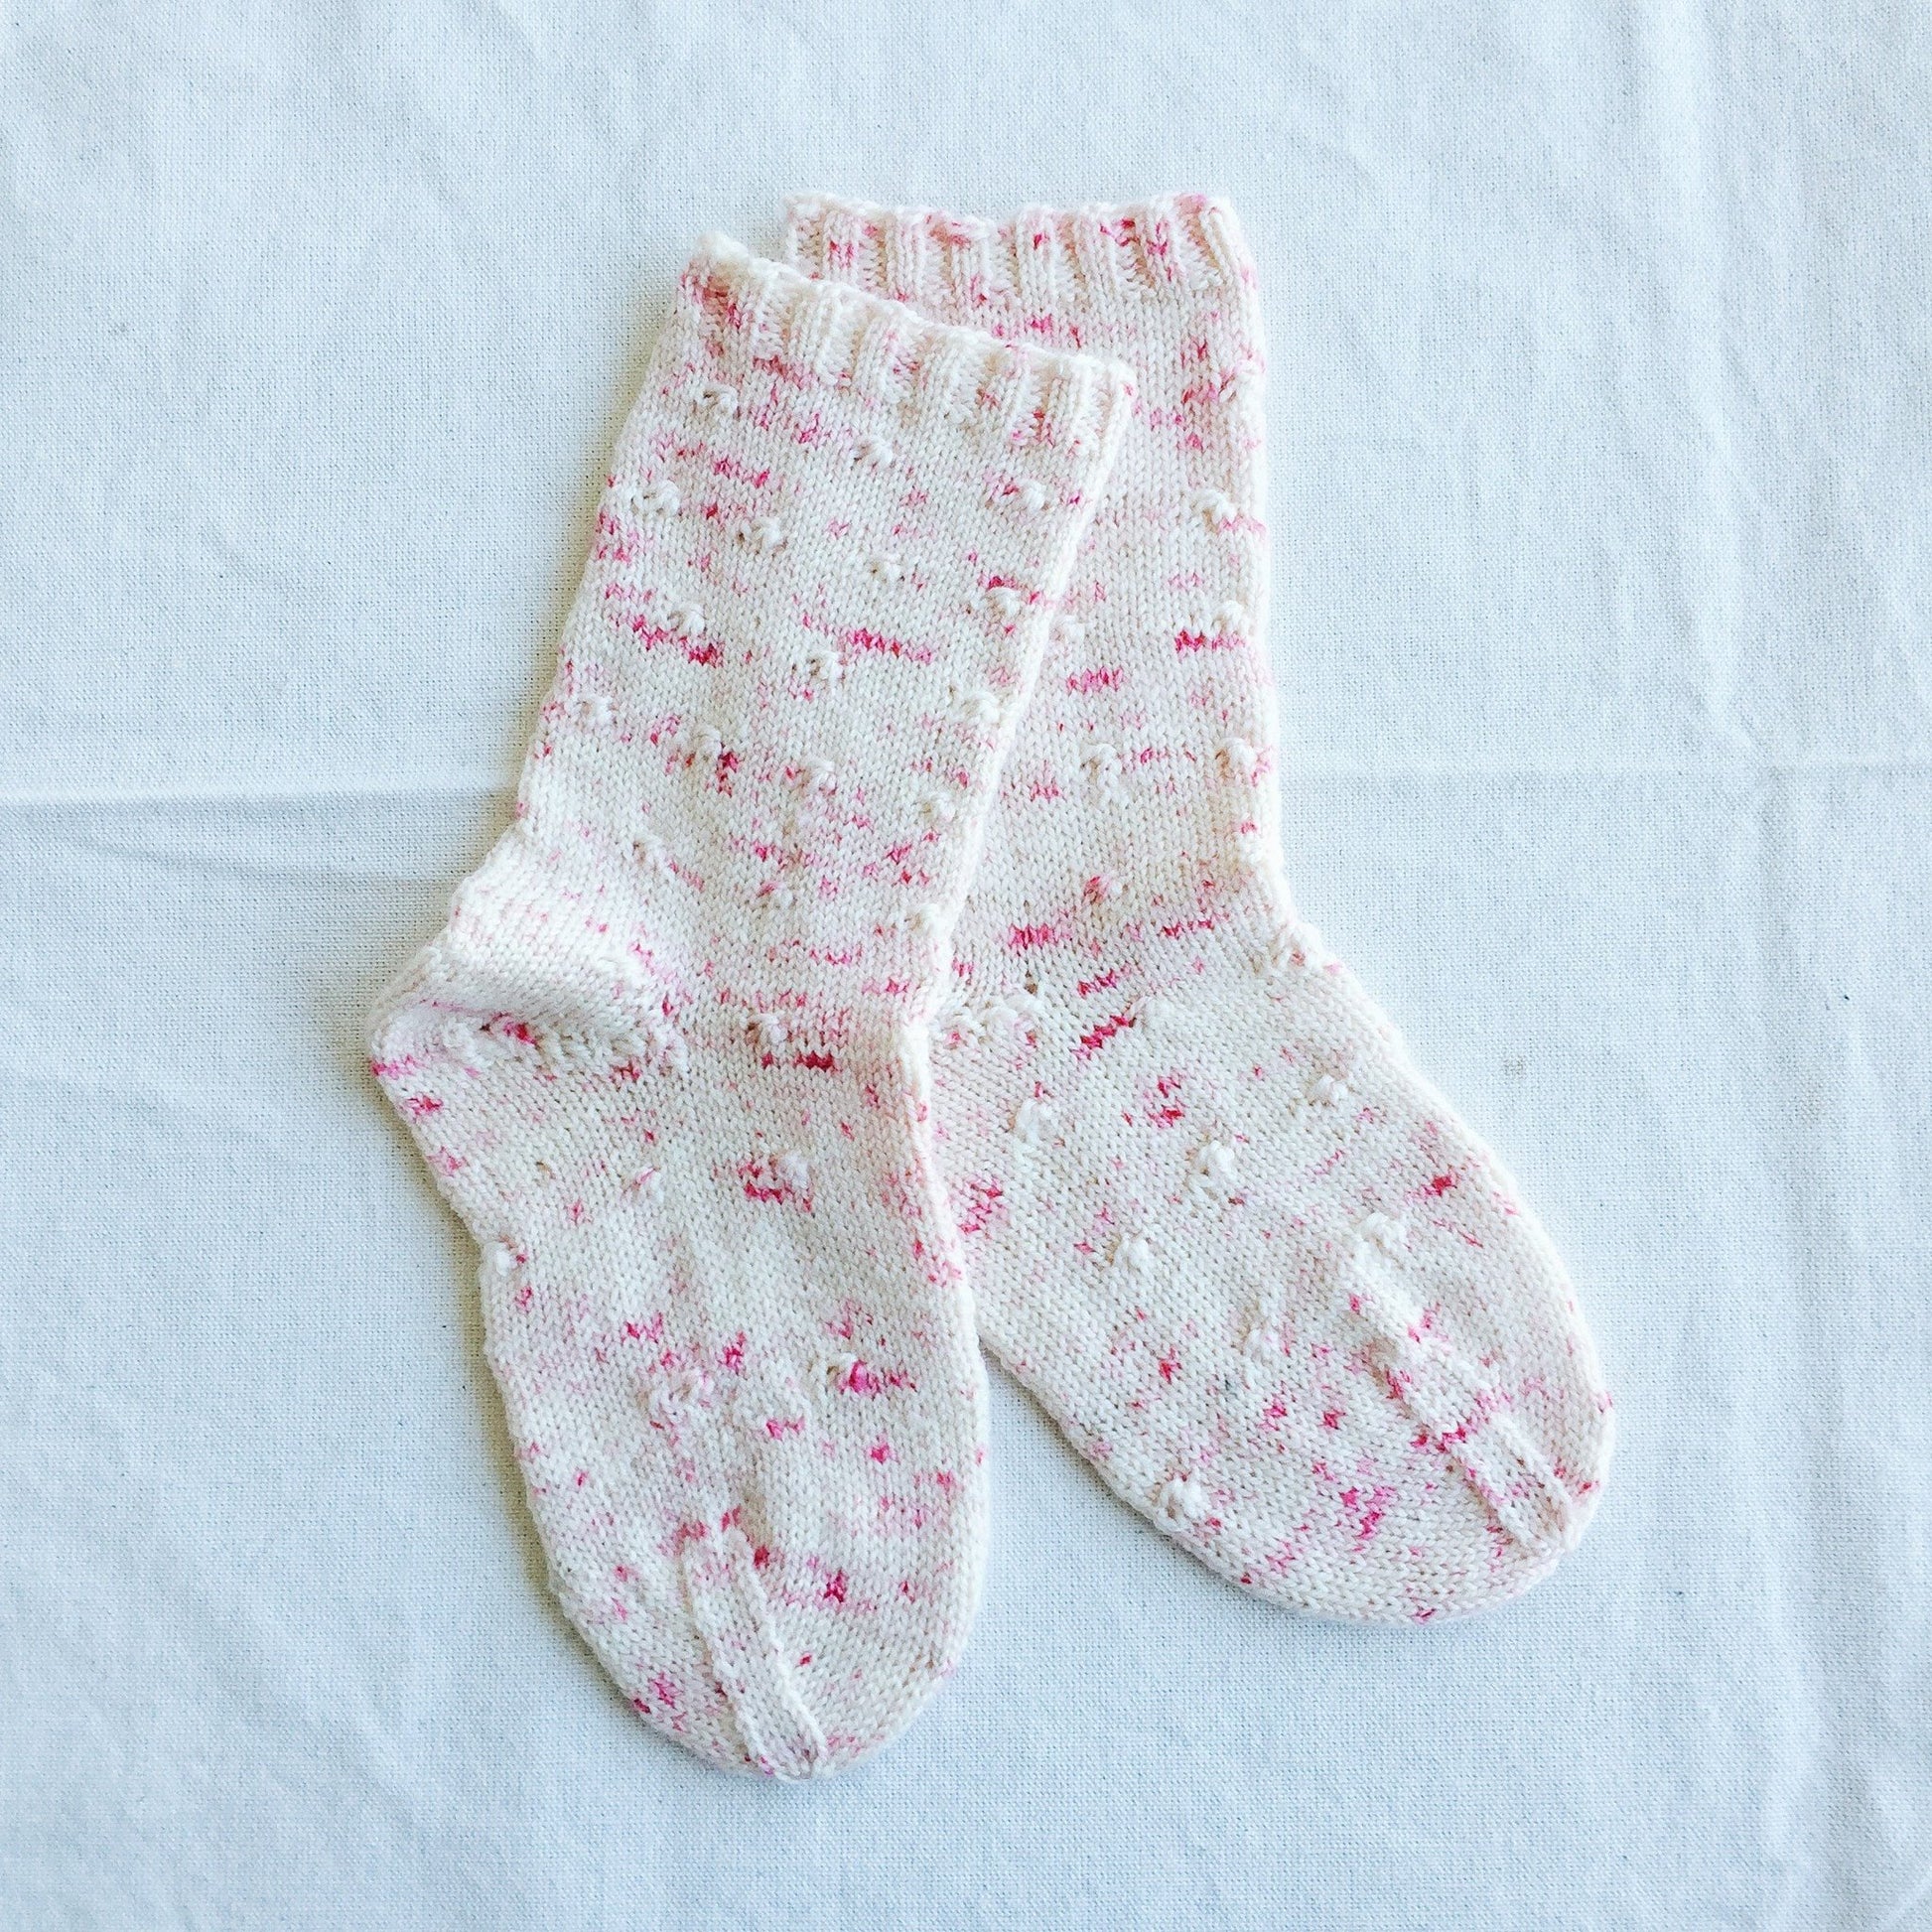 MAD | TOSH Pattern Dimpled Socks